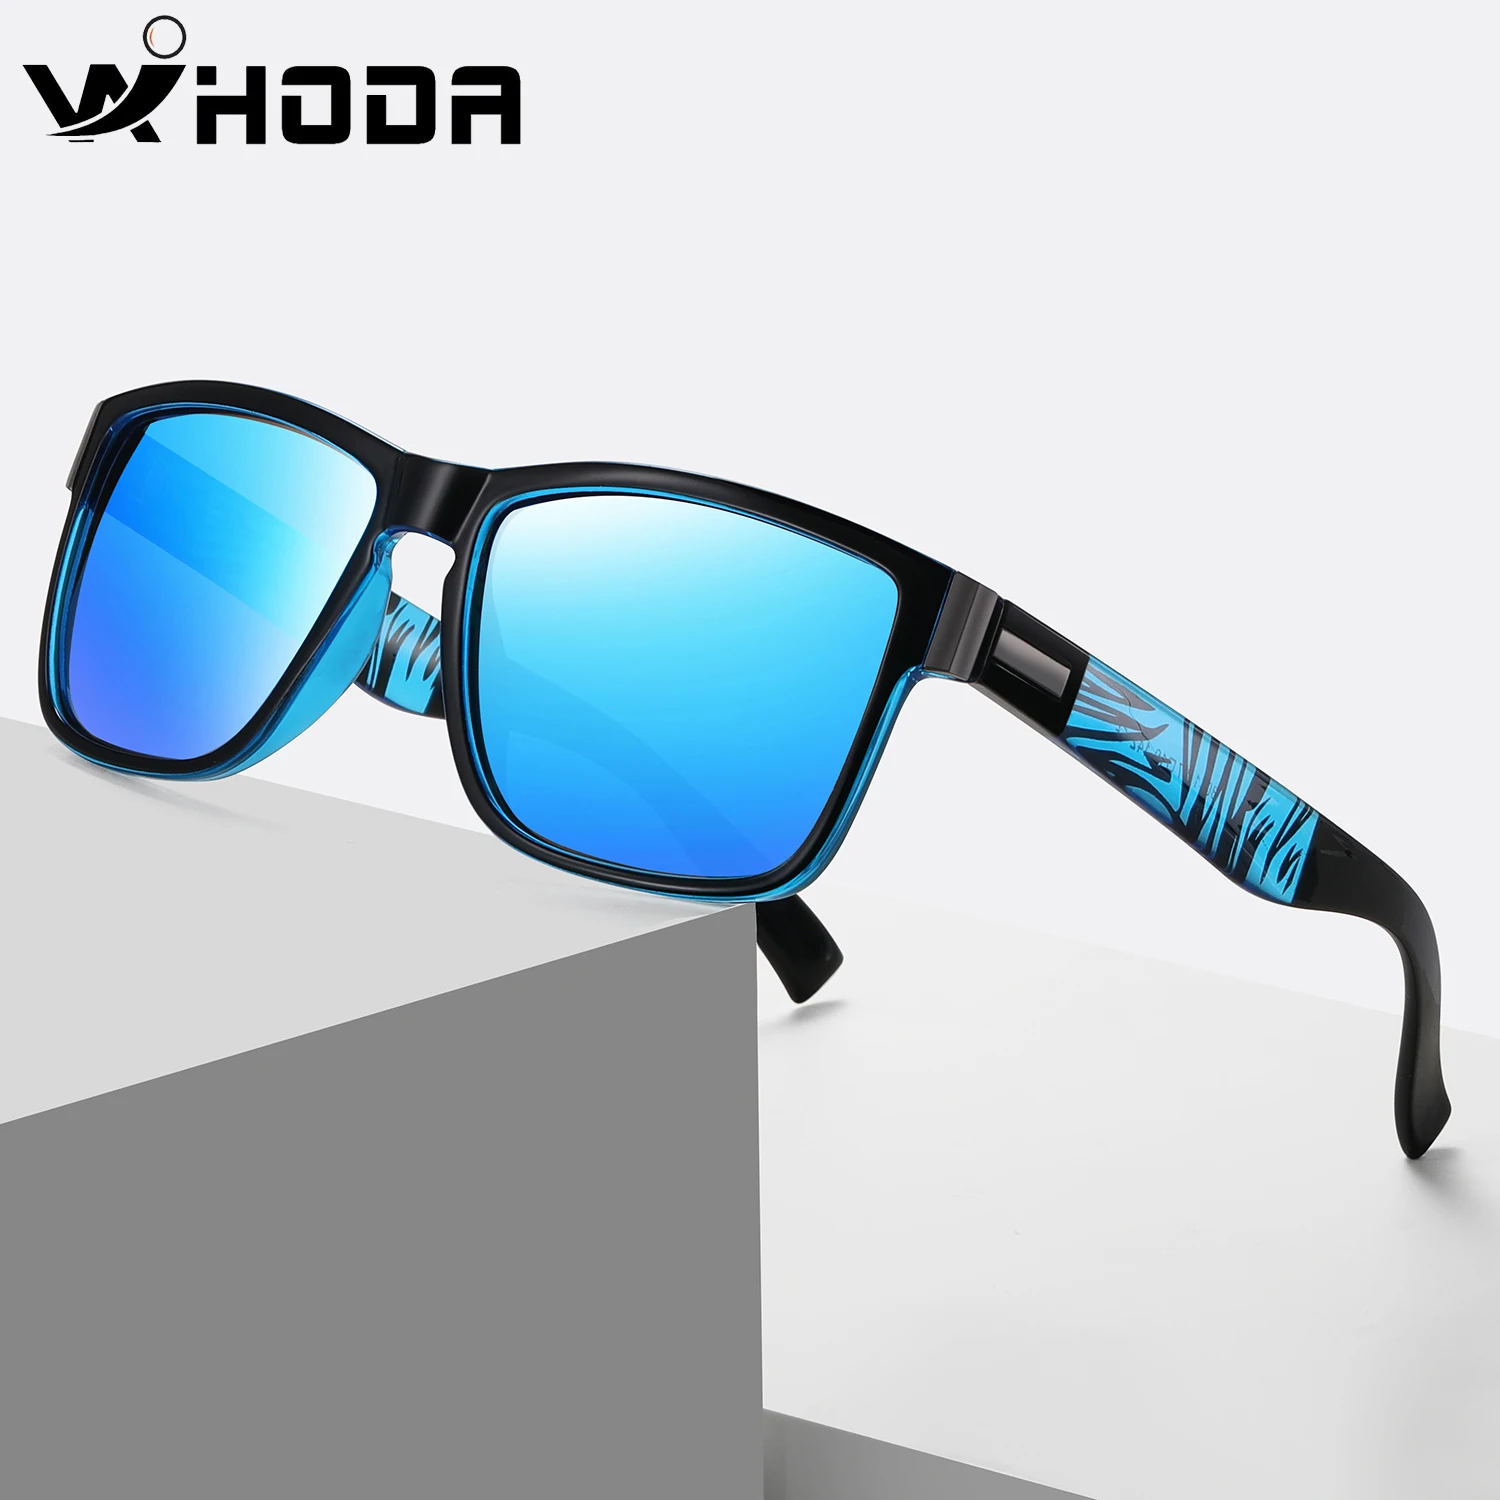 

WIHODA Outdoor Men's Polarized Square Plastic Sunglasses, Male Cycliing Mirror TAC Lens UV400 Protective Sunglass S3041